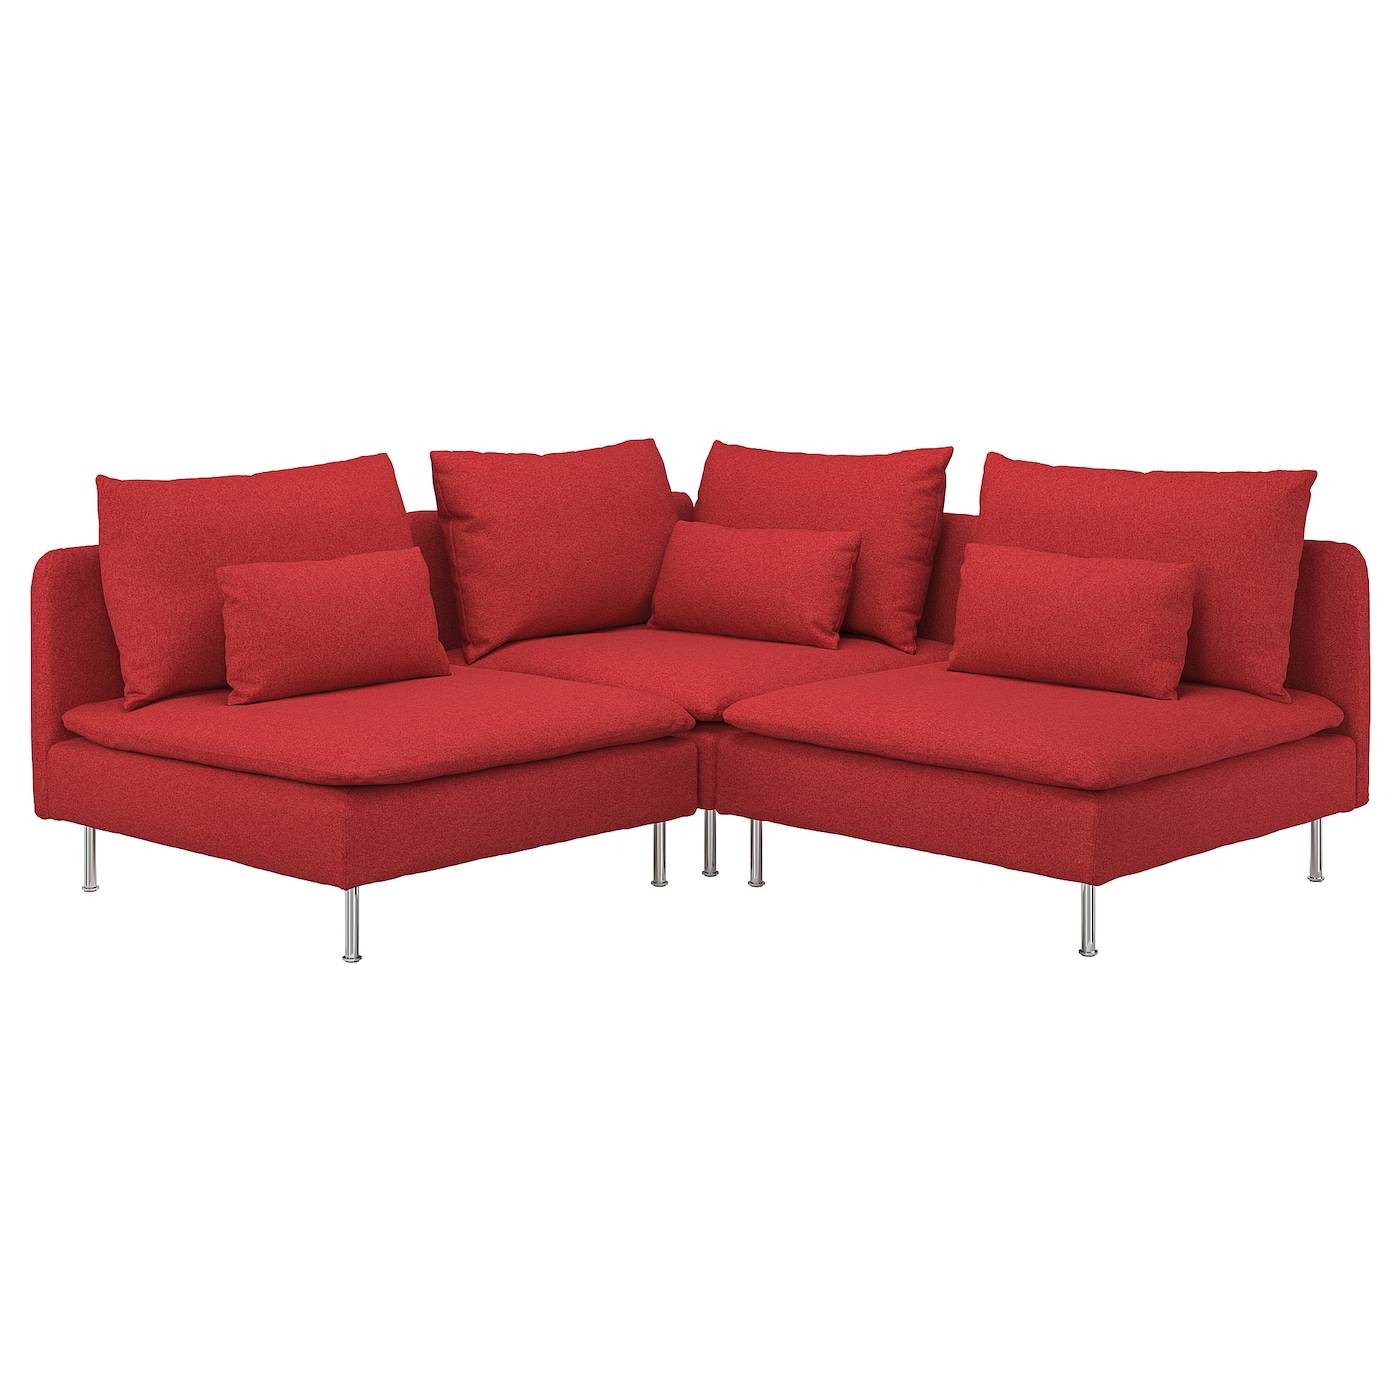 3-местный угловой диван- IKEA SÖDERHAMN/SODERHAMN/СЁДЕРХАМН ИКЕА, 192/192х69х99 см, красный